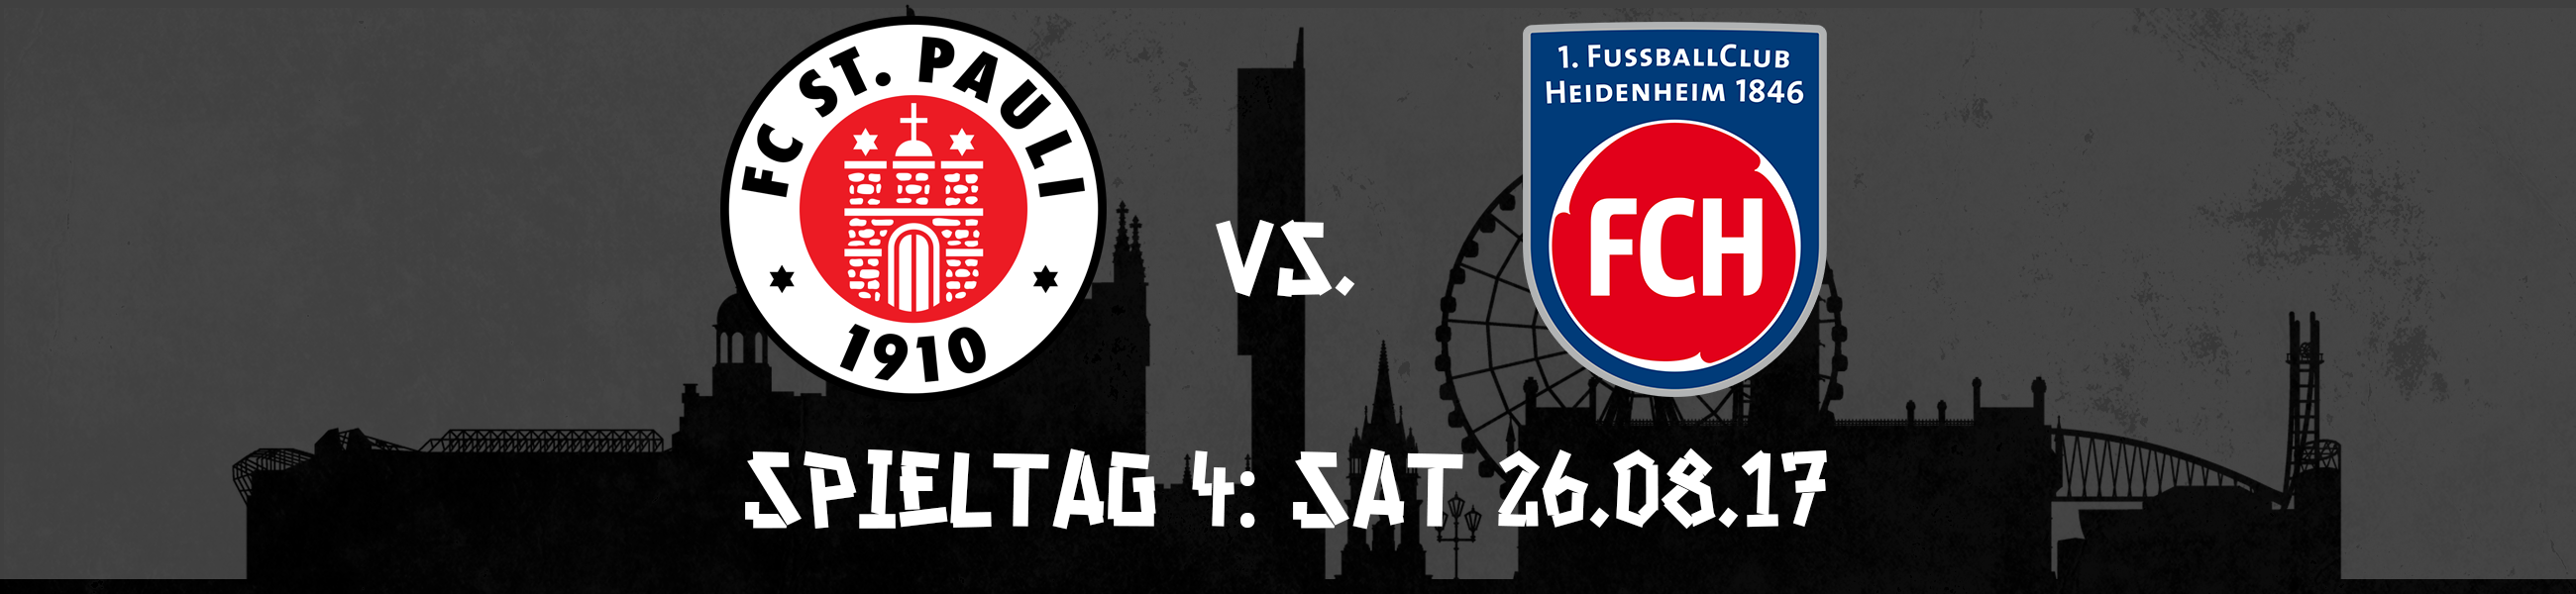 Spieltag 4: FC St. Pauli - 1. FC Heidenheim